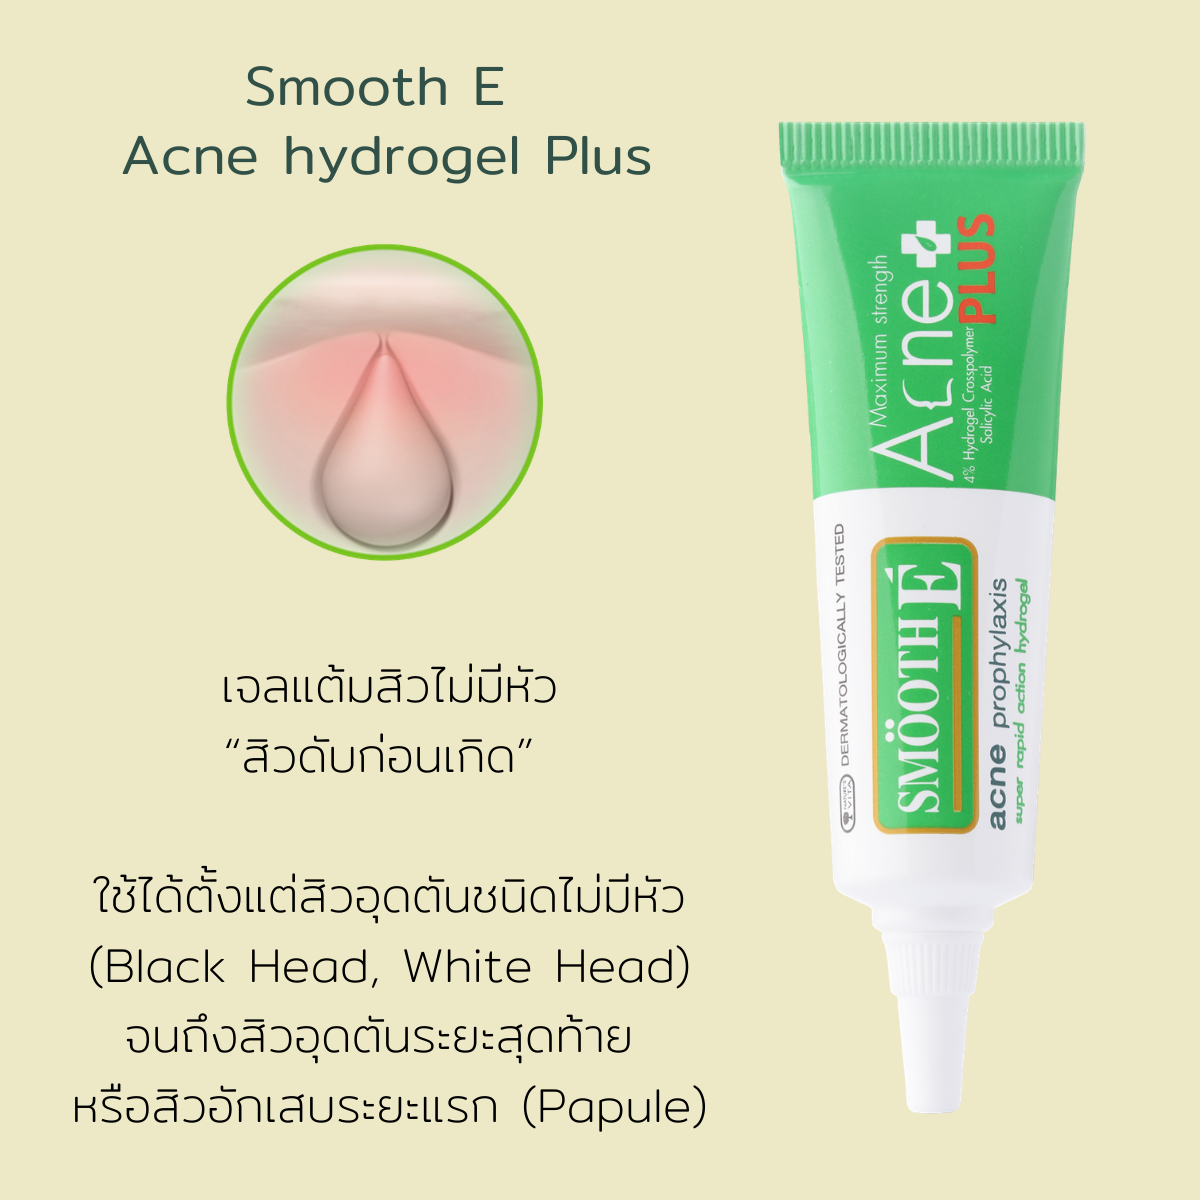 smooth e acne hydrogel Plus review, smooth e acne hydrogel Plus สิวอุดตัน,smooth e acne hydrogel Plus 10g ราคา,smooth e acne hydrogel Plus ราคา,smooth e acne hydrogel Plus รีวิว ,smooth e acne hydrogel Plus สรรพคุณ,SMOOTH-E,Acne Hydrogel Plus 10g เจลแต้มสิว,SMOOTH-E Acne Hydrogel Plus 10g,สมูทอี เจลแต้มสิว,สมูทอี แอคเน่ ไฮโดรเจล พลัส,สมูทอี แอคเน่ ราคา,